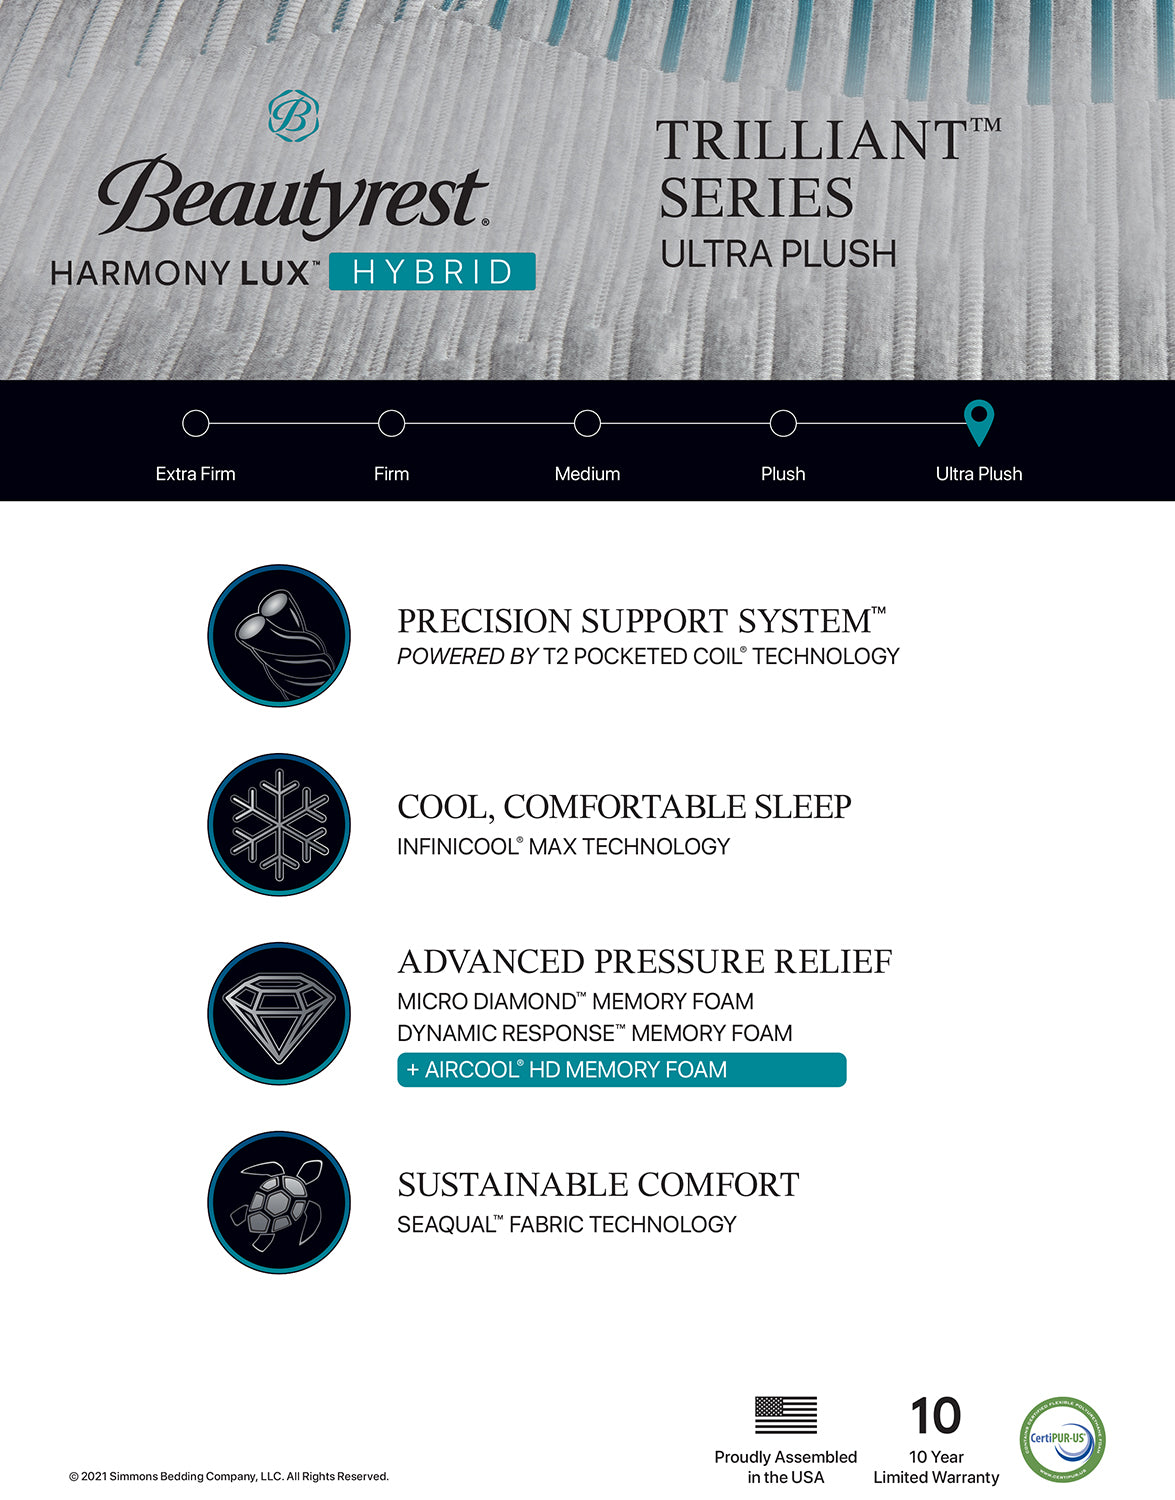 15.5" Beautyrest Harmony Lux Trilliant Hybrid Ultra Plush